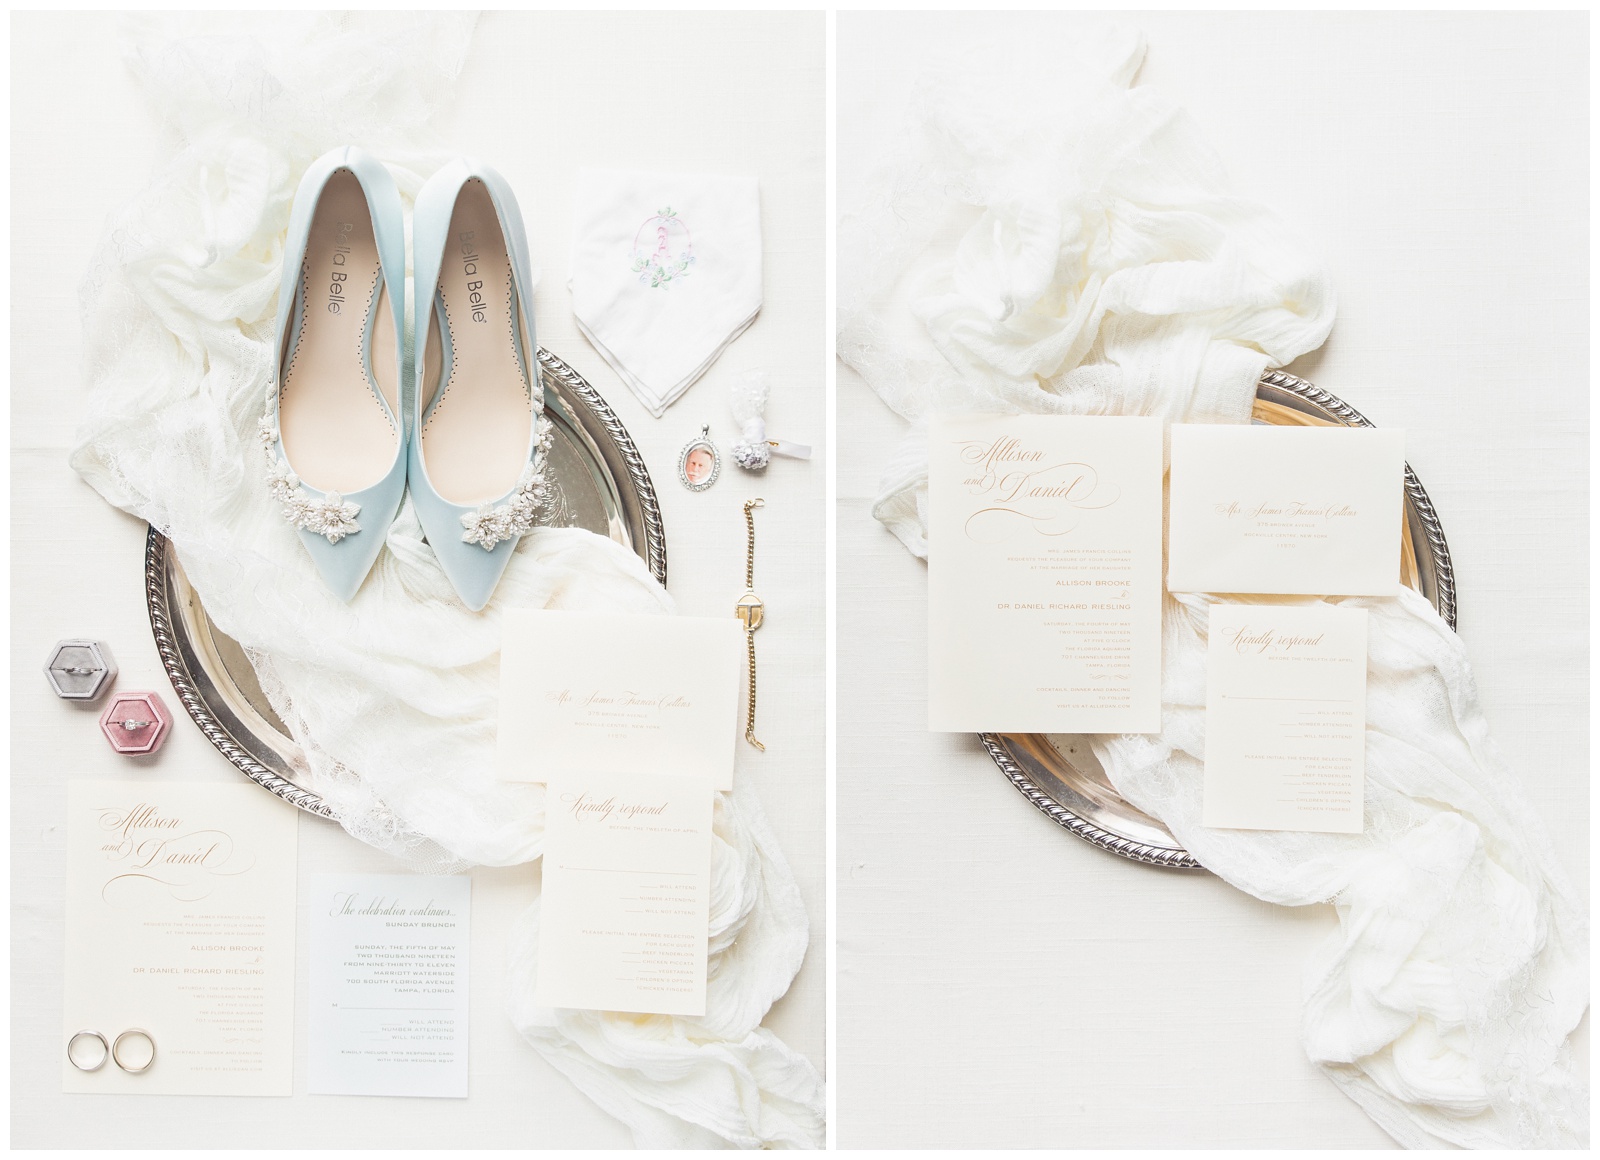 Elegant wedding day bridal details | Matlock and Kelly Photography